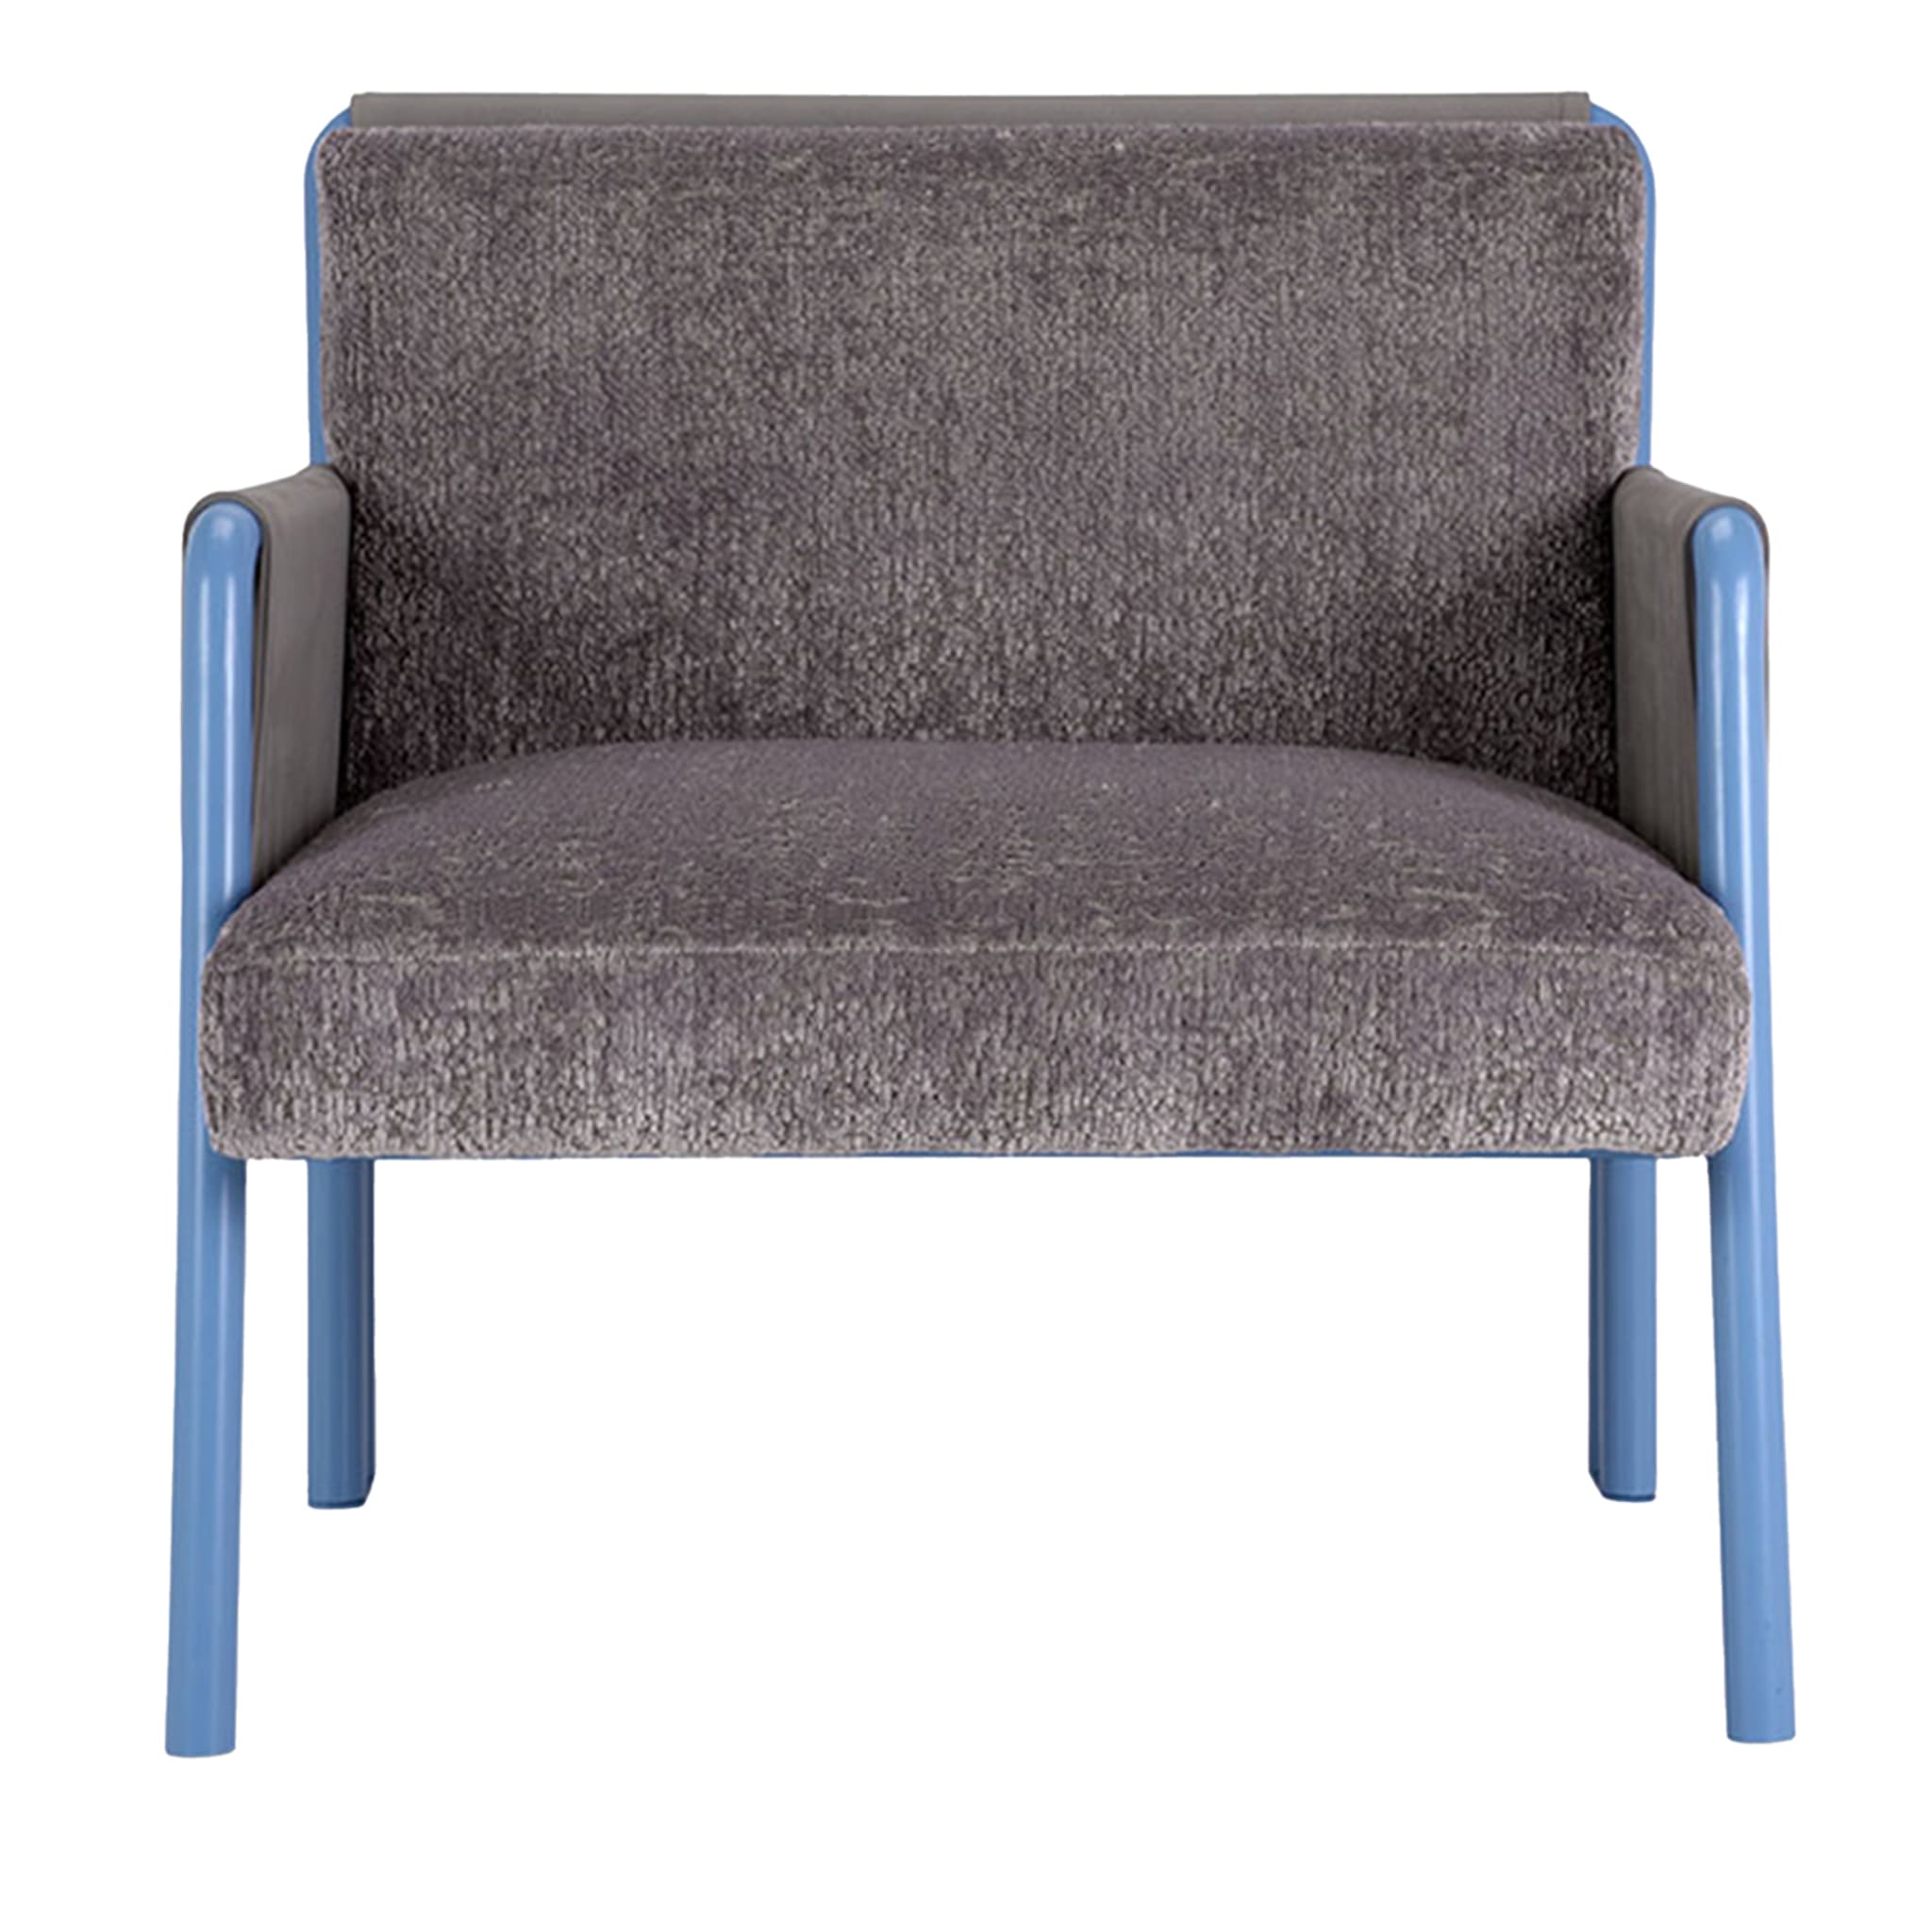 Swing Gray Chenille & Azure Armchair by Debonademeo - Main view